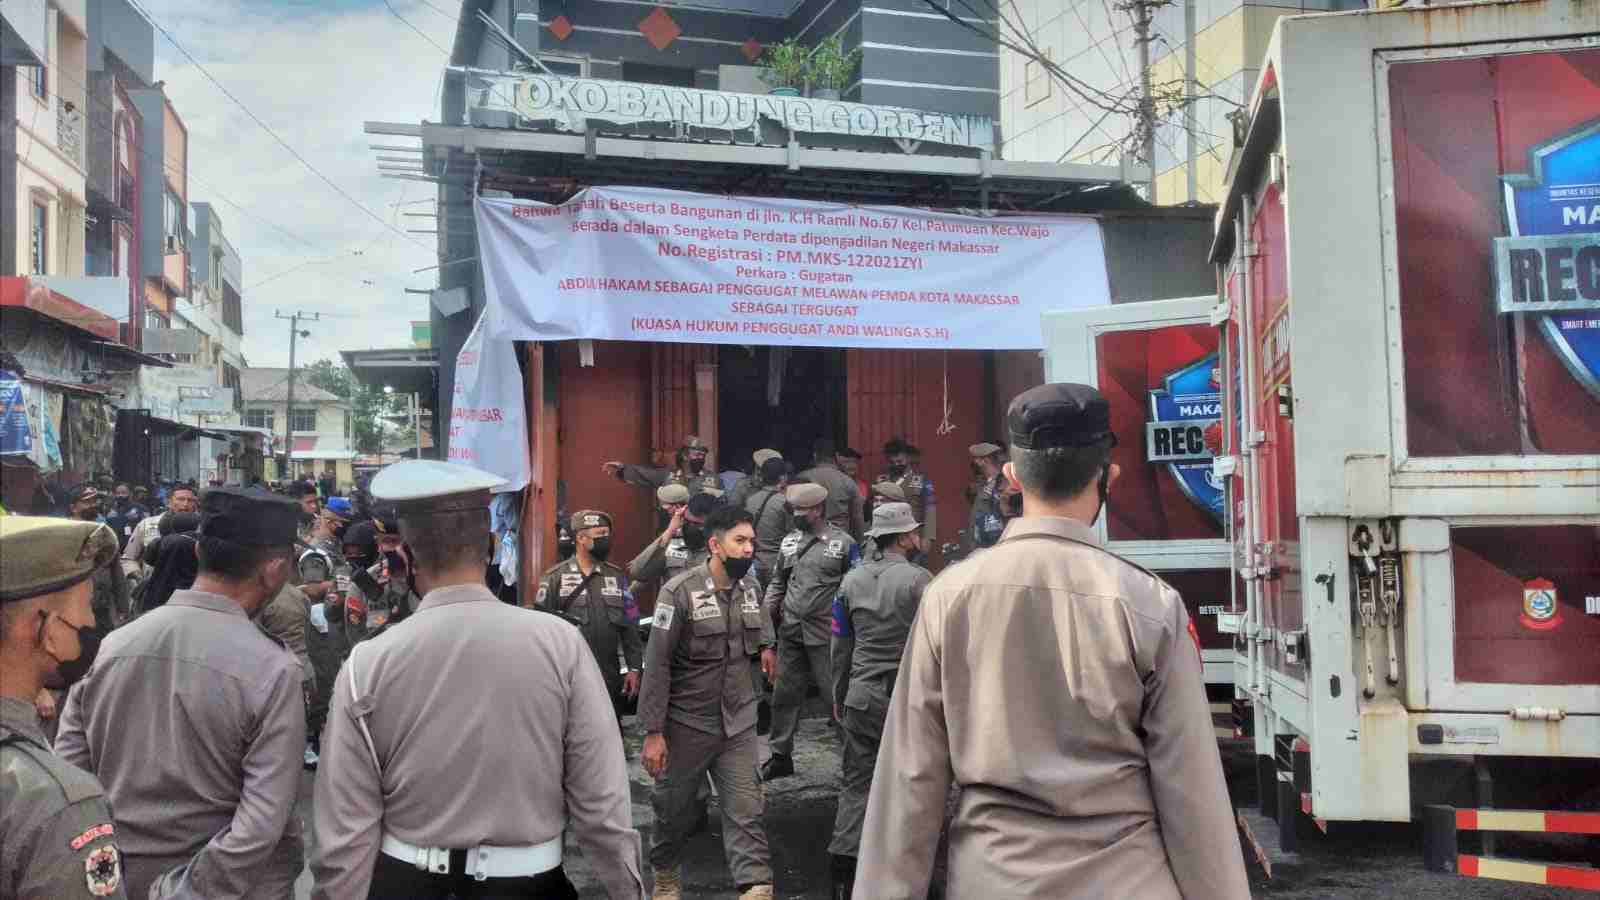 Bangunan Bandung Gorden Dieksekusi Hari Ini